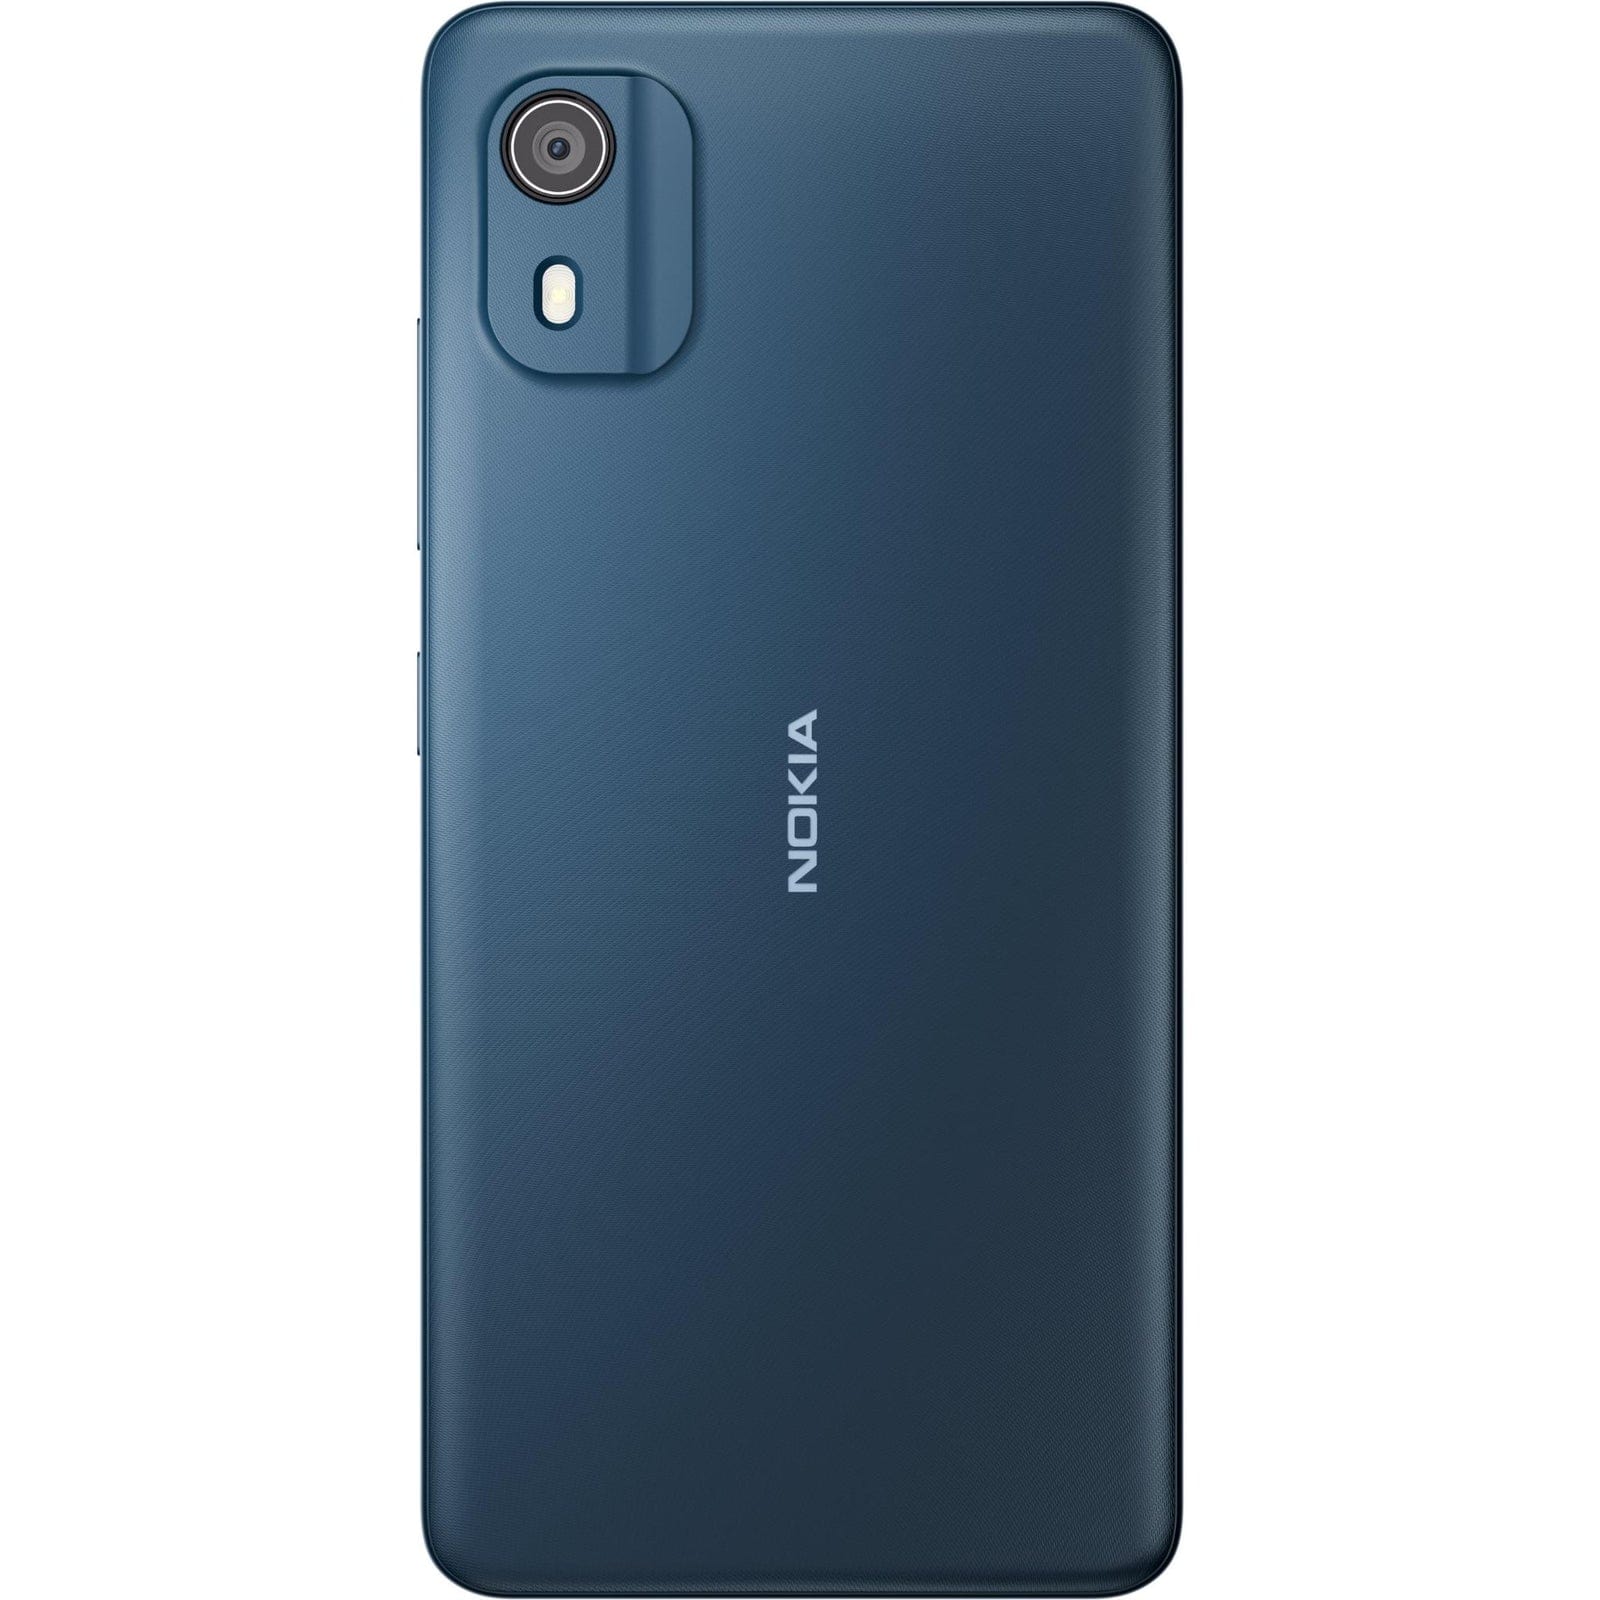 Nokia C02 32GB (Charcoal/Dark Cyan)